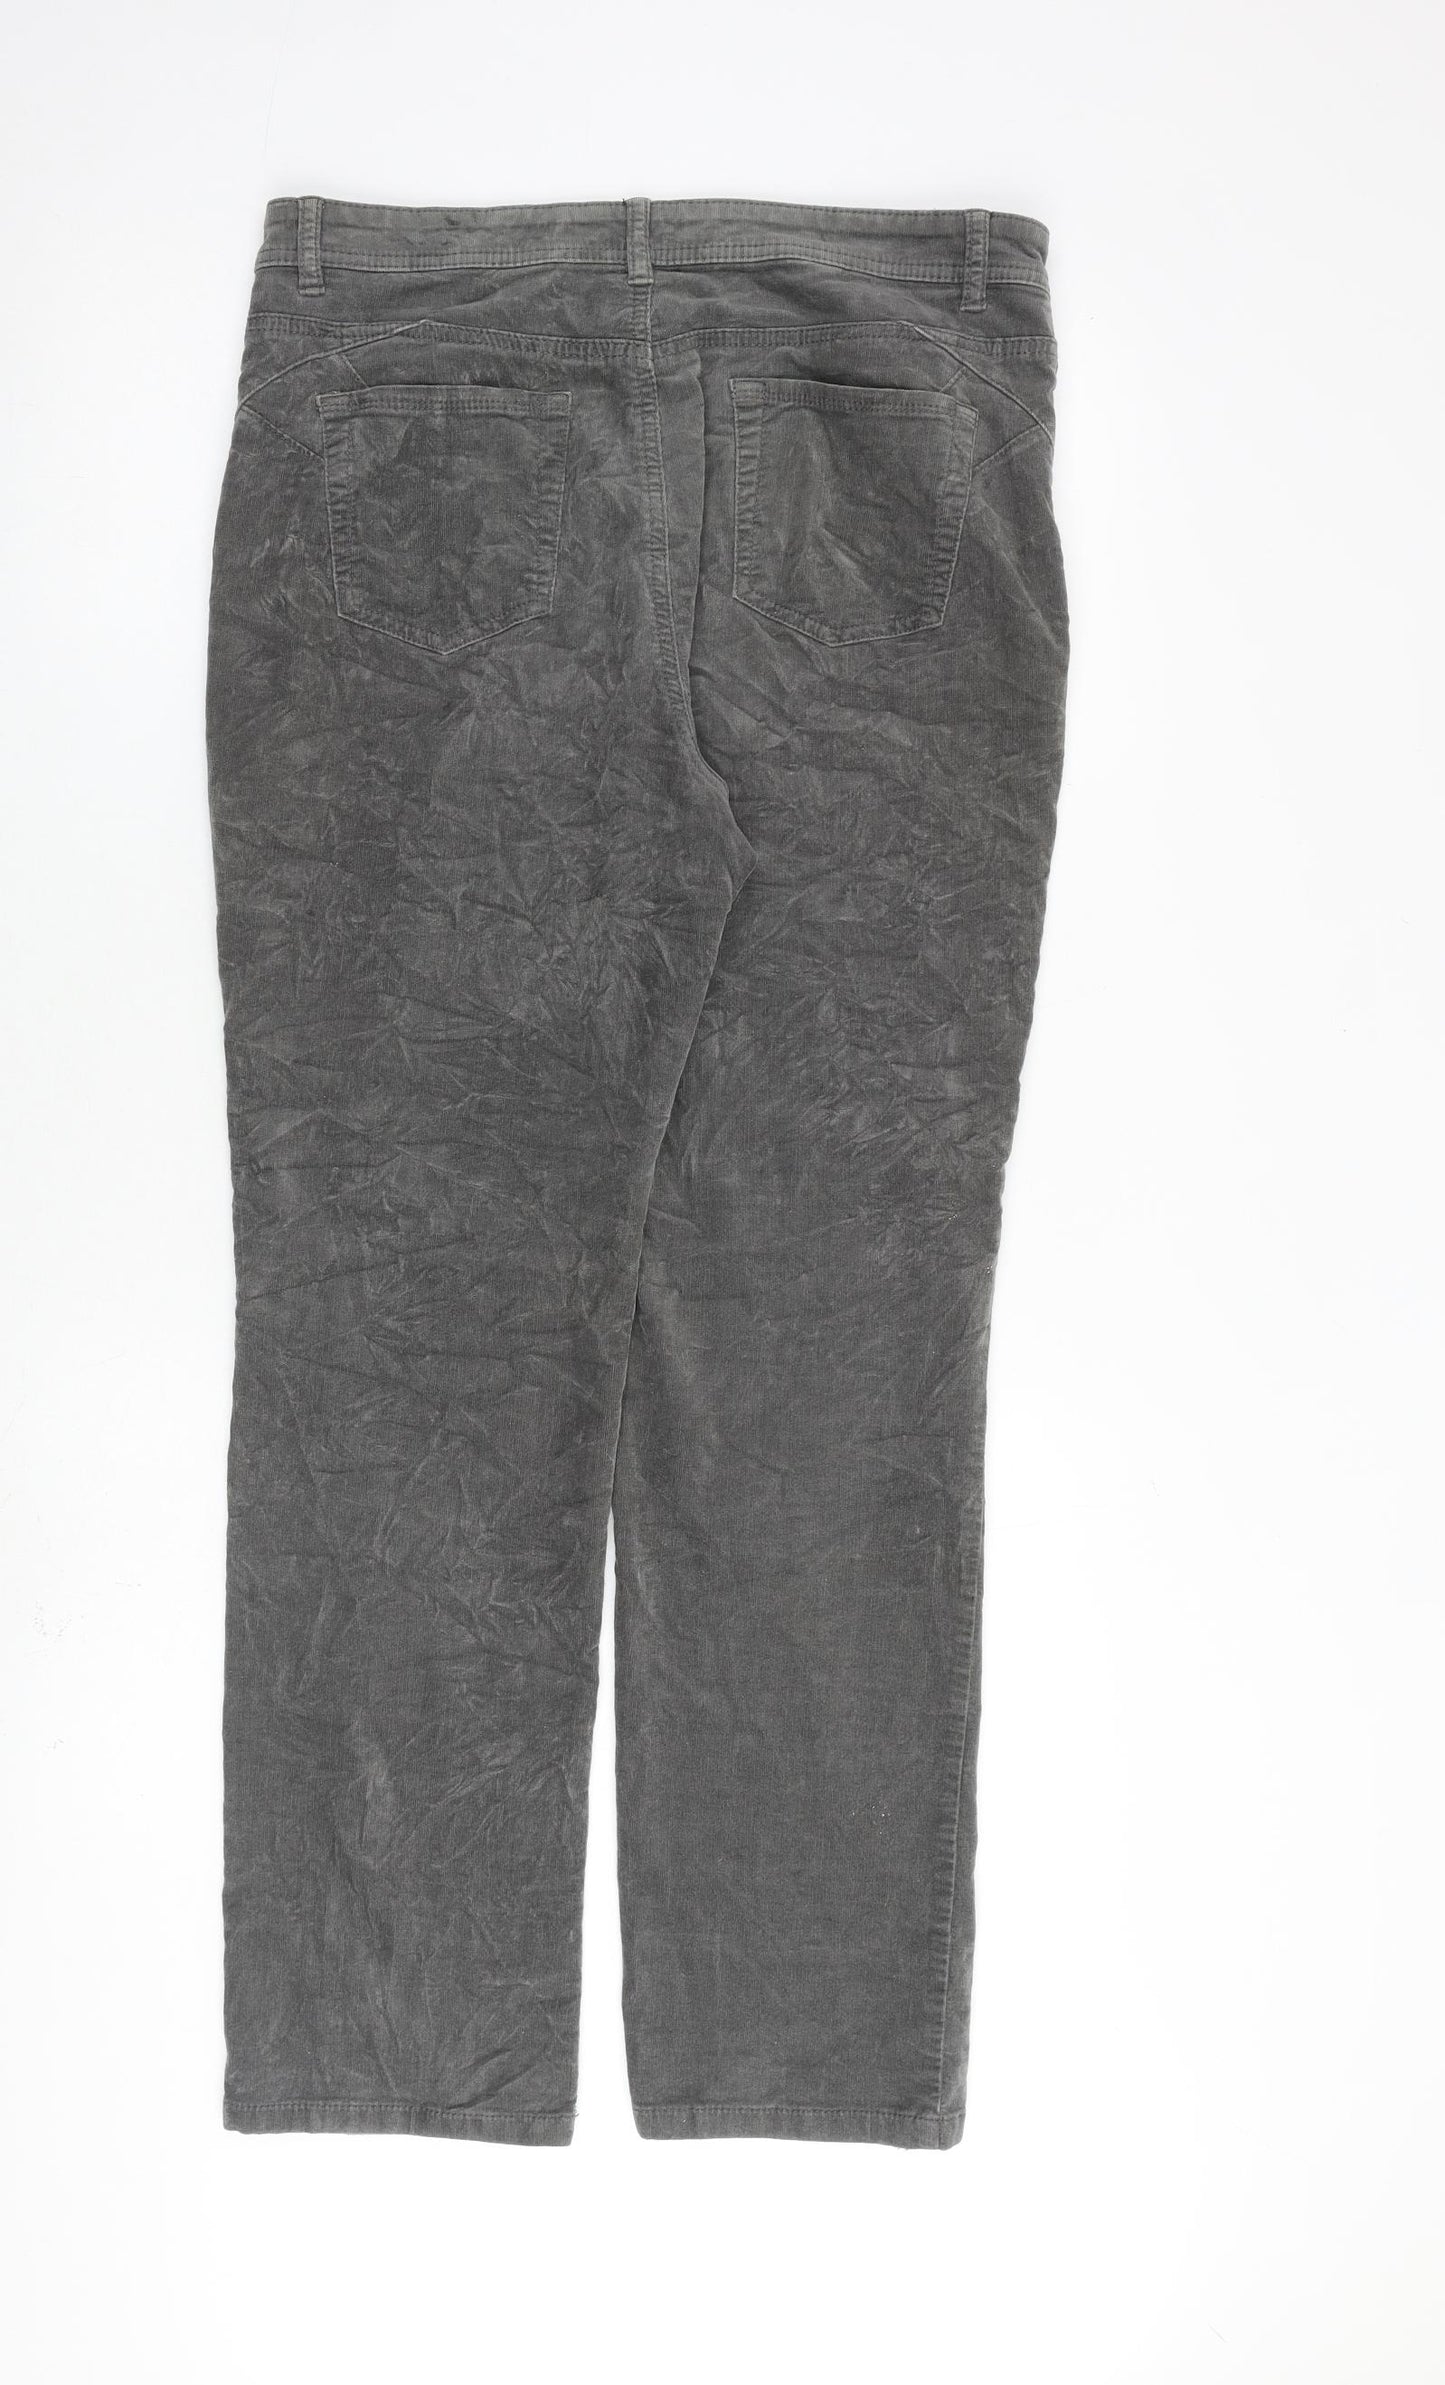 Per Una Womens Grey Cotton Trousers Size 14 L30 in Regular Zip